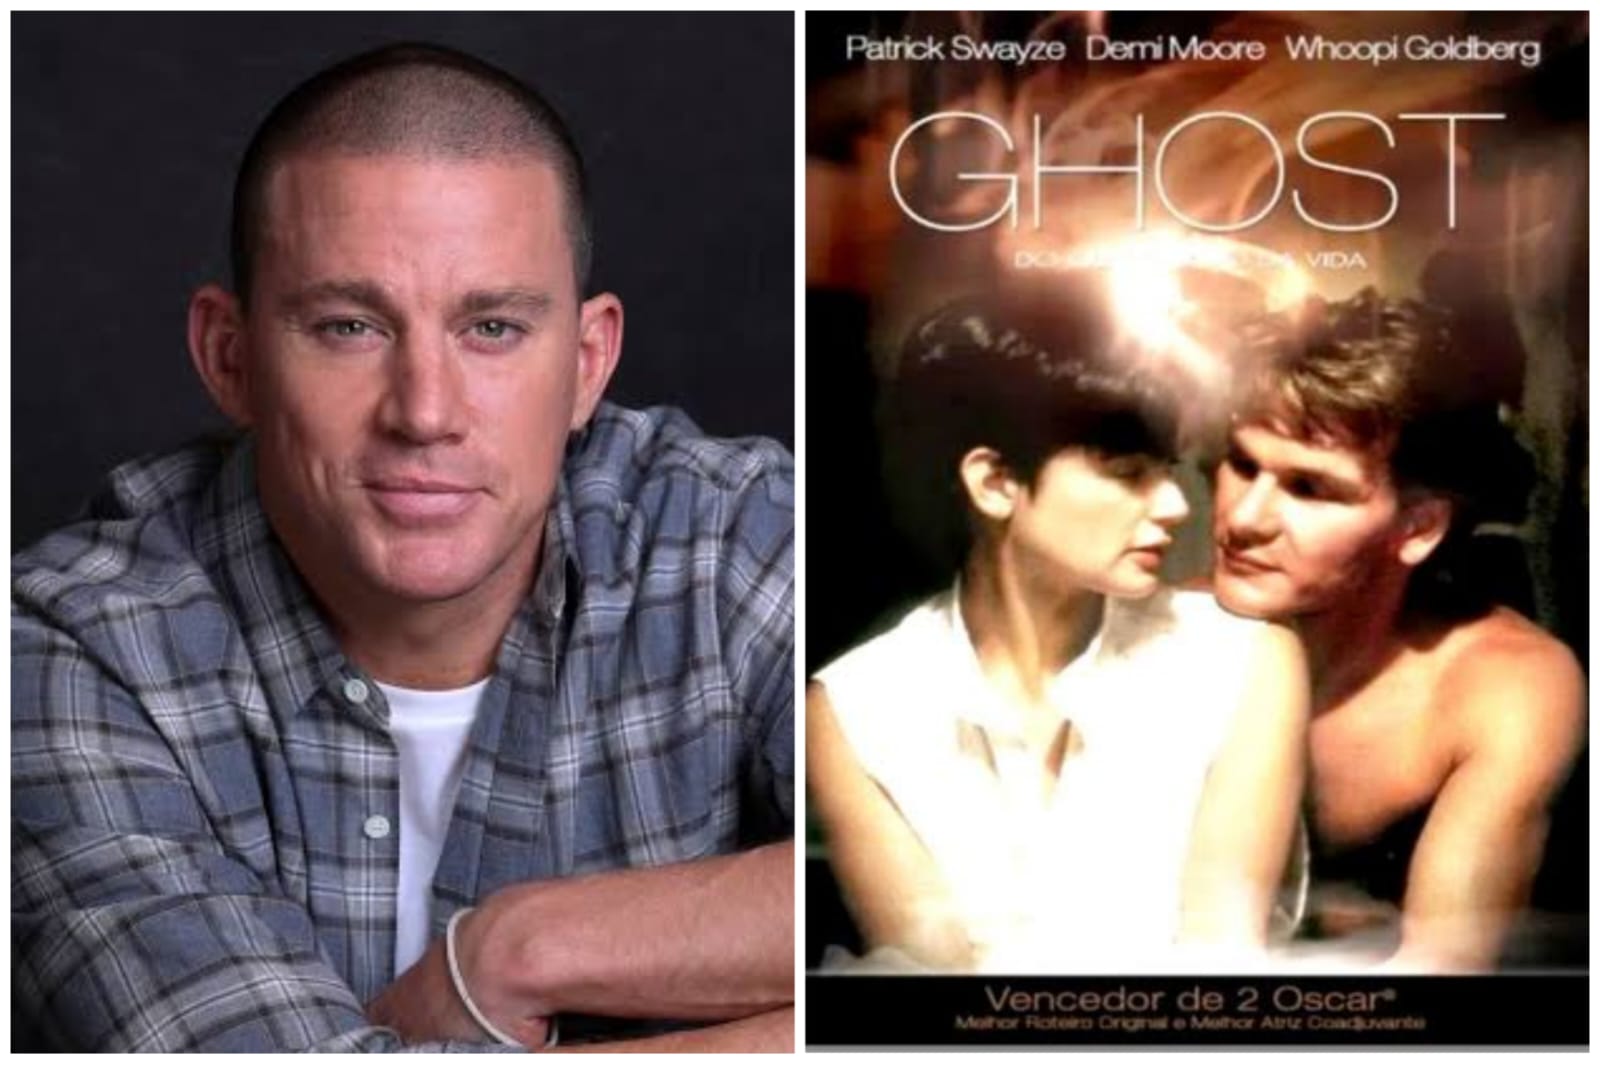 Novo Ghost terá Channing Tatum no papel de Patrick Swayze